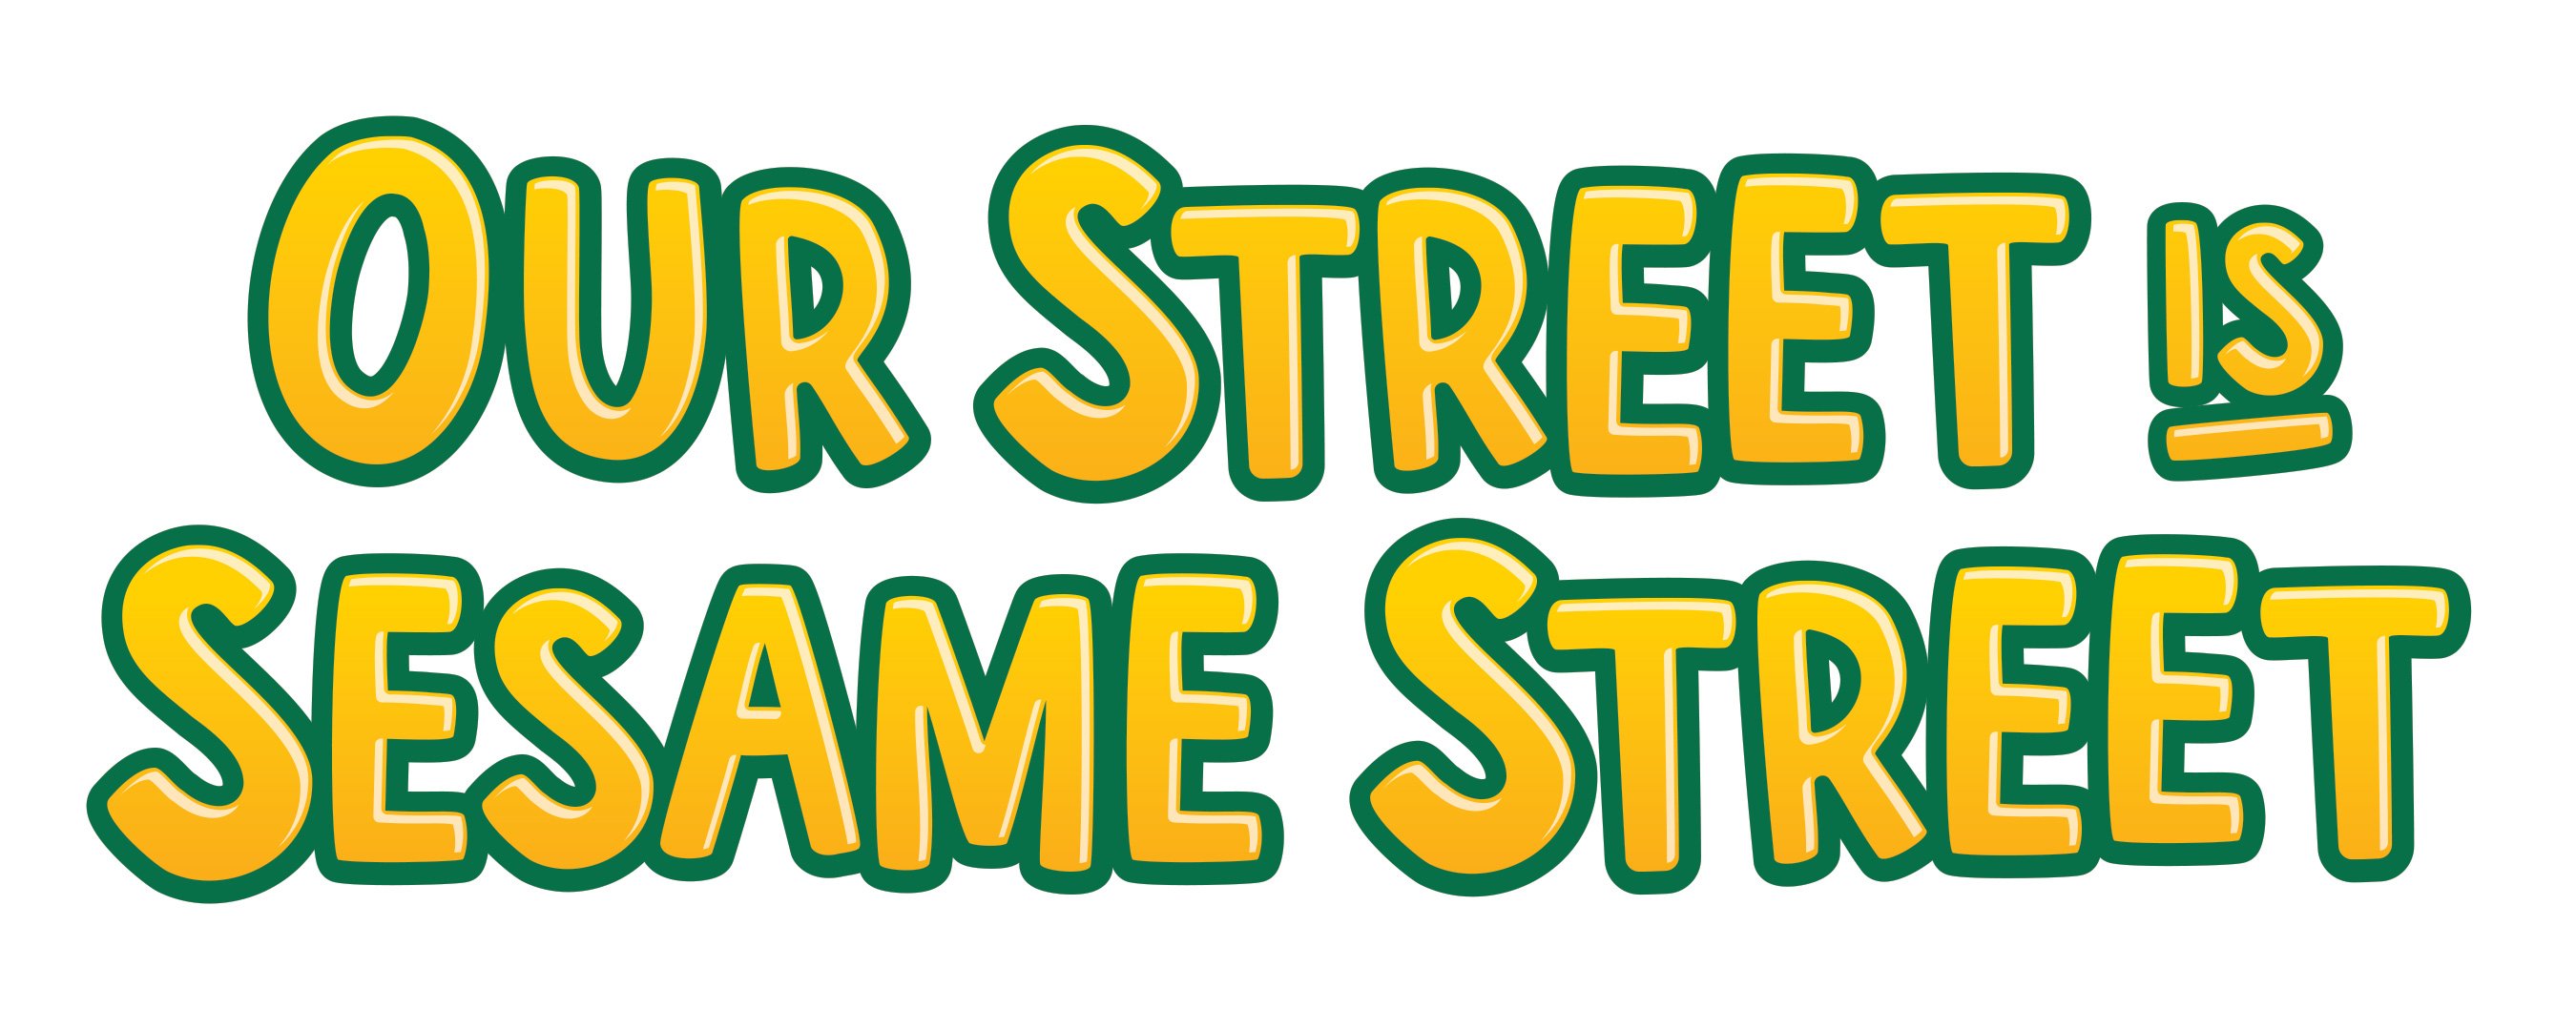 Our Street is Sesame Street logo